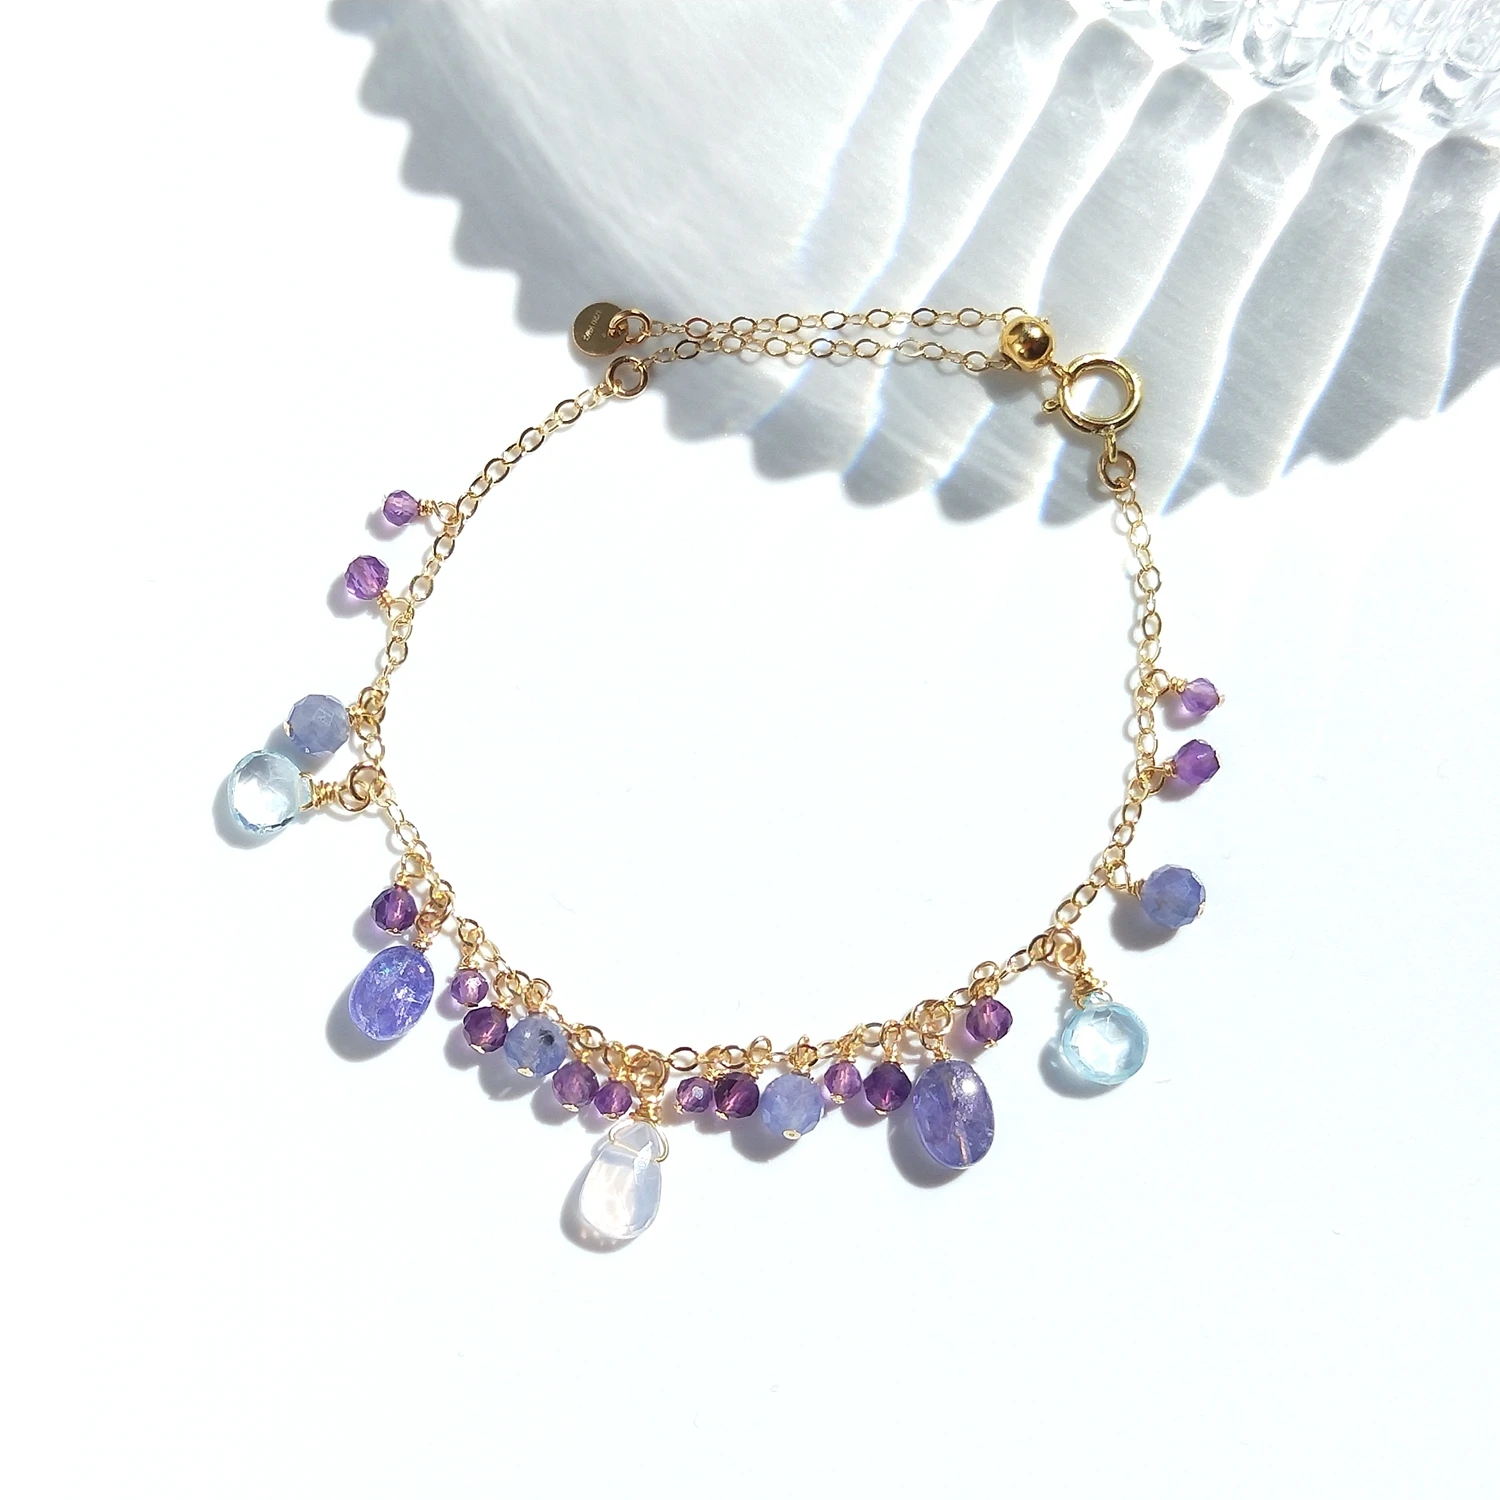 Lii Ji Gemstone 14K Gold Filled Adjustable Chain Bracelet Natural Lavender Quartz Tanzanite Amethyst Topaz Handmade Jewelry